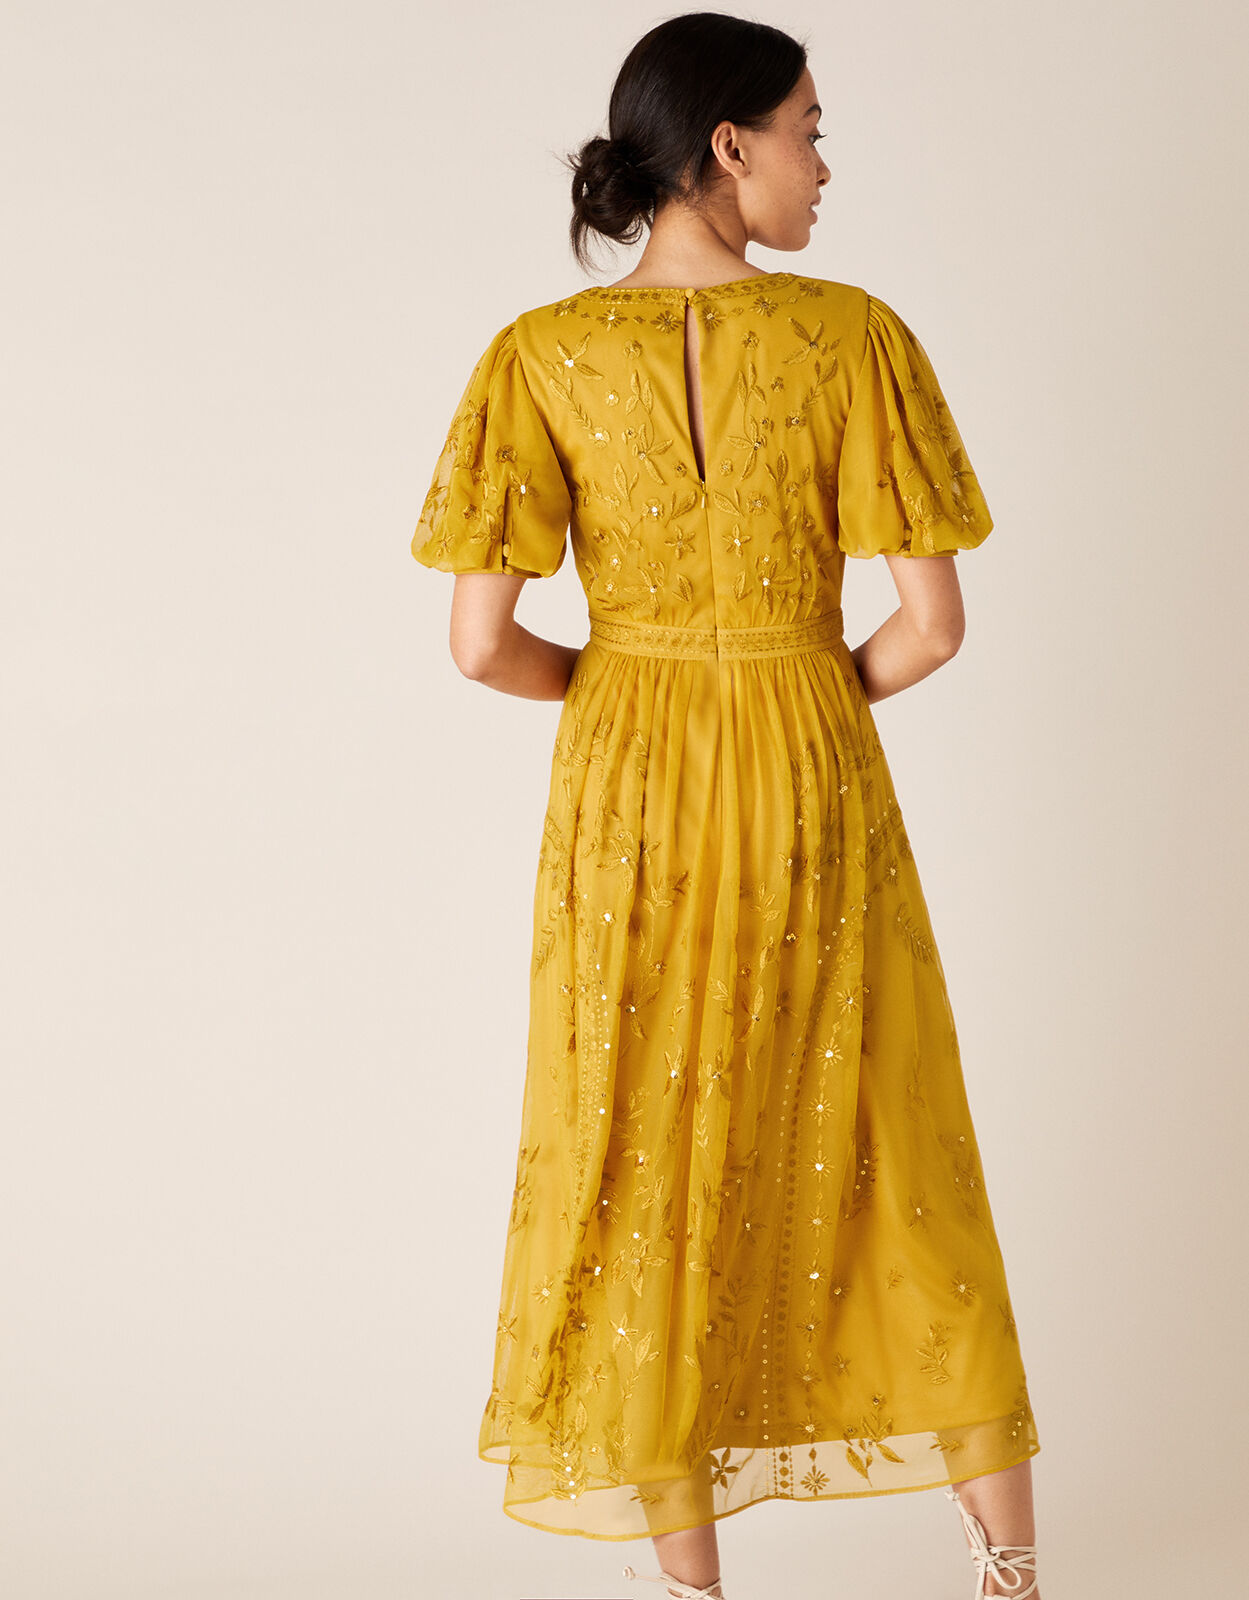 Valerie Sequin Embroidered Tea Dress ...